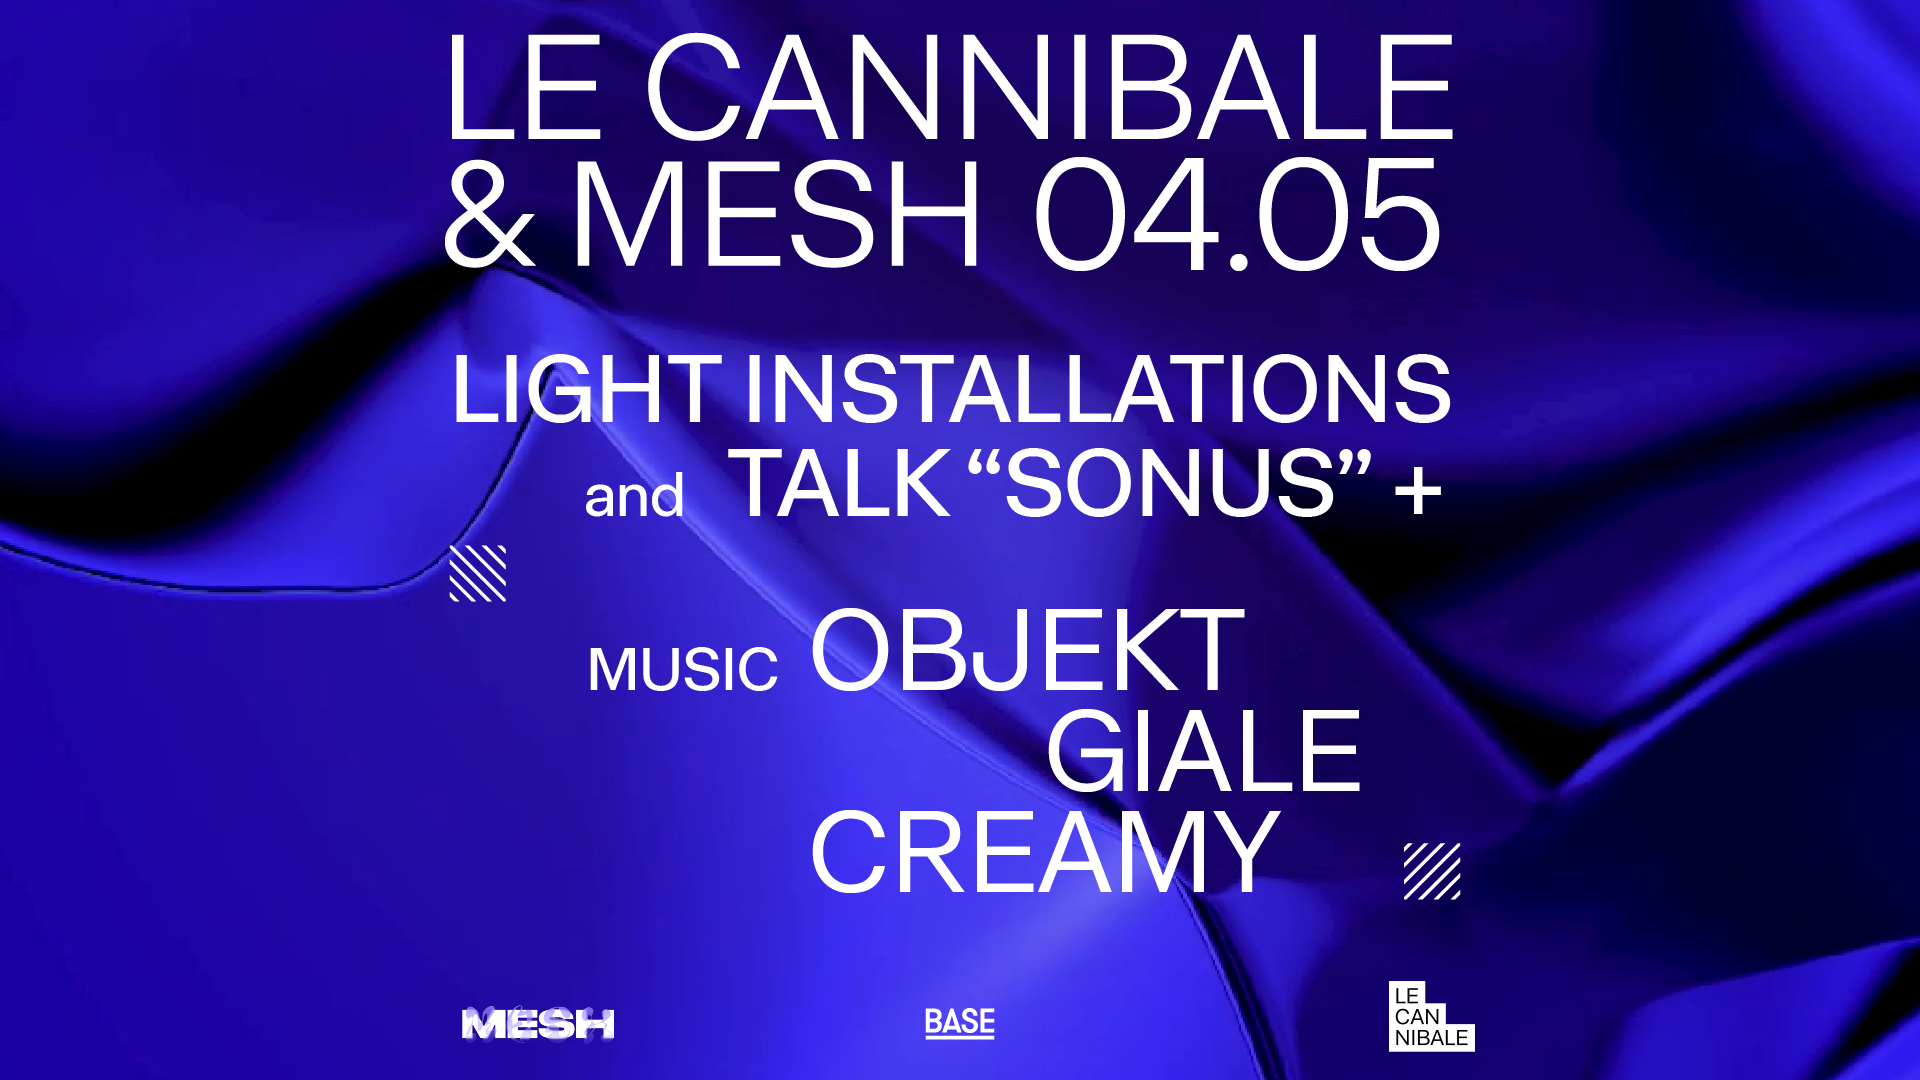 Le Cannibale & Mesh - Objekt, Giale, Creamy - フライヤー表